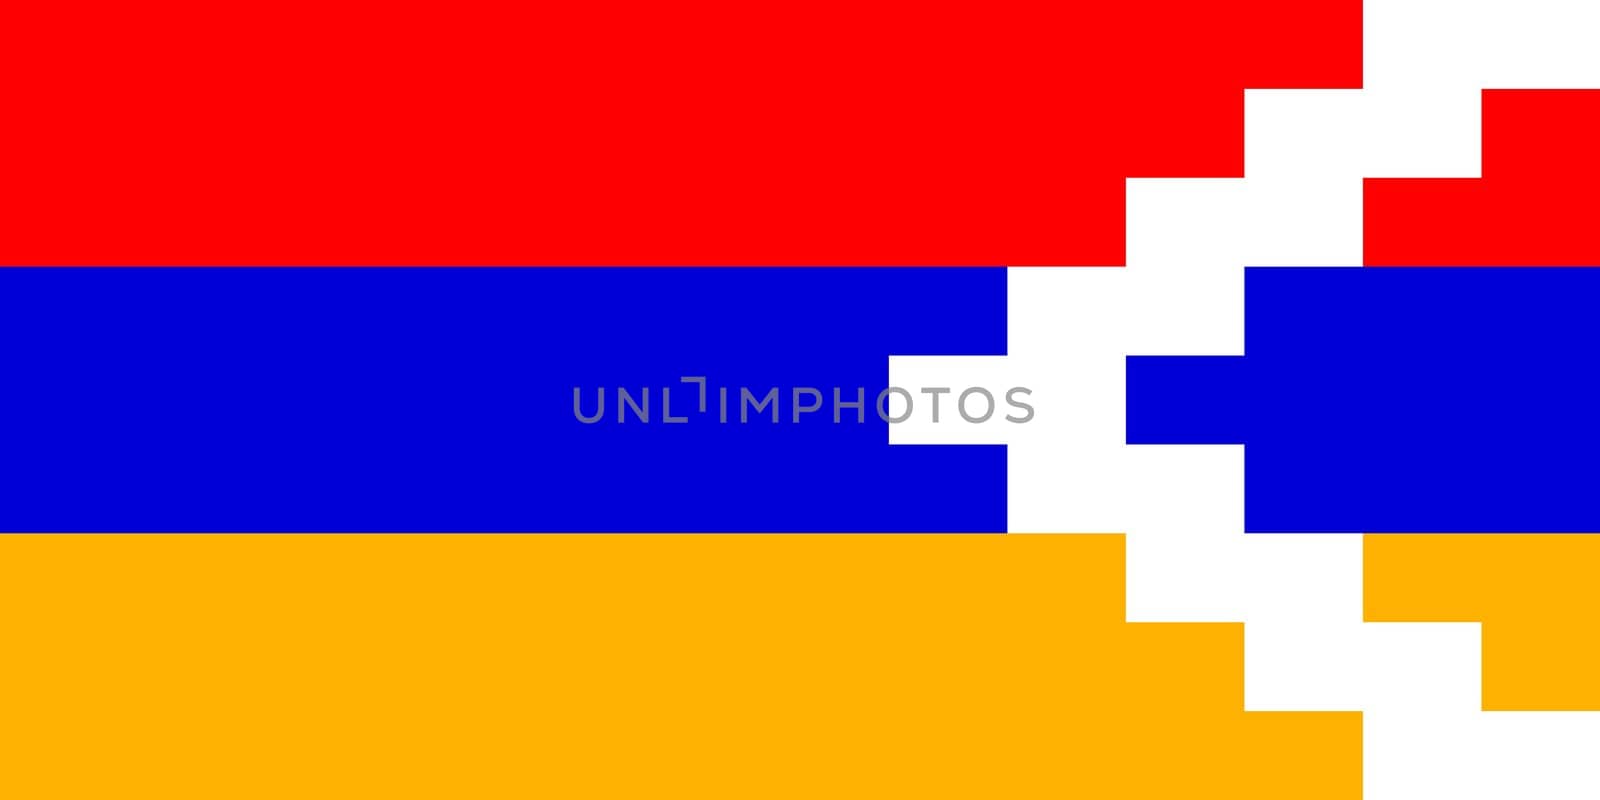 The national flag of Nagorno Karabakh by claudiodivizia